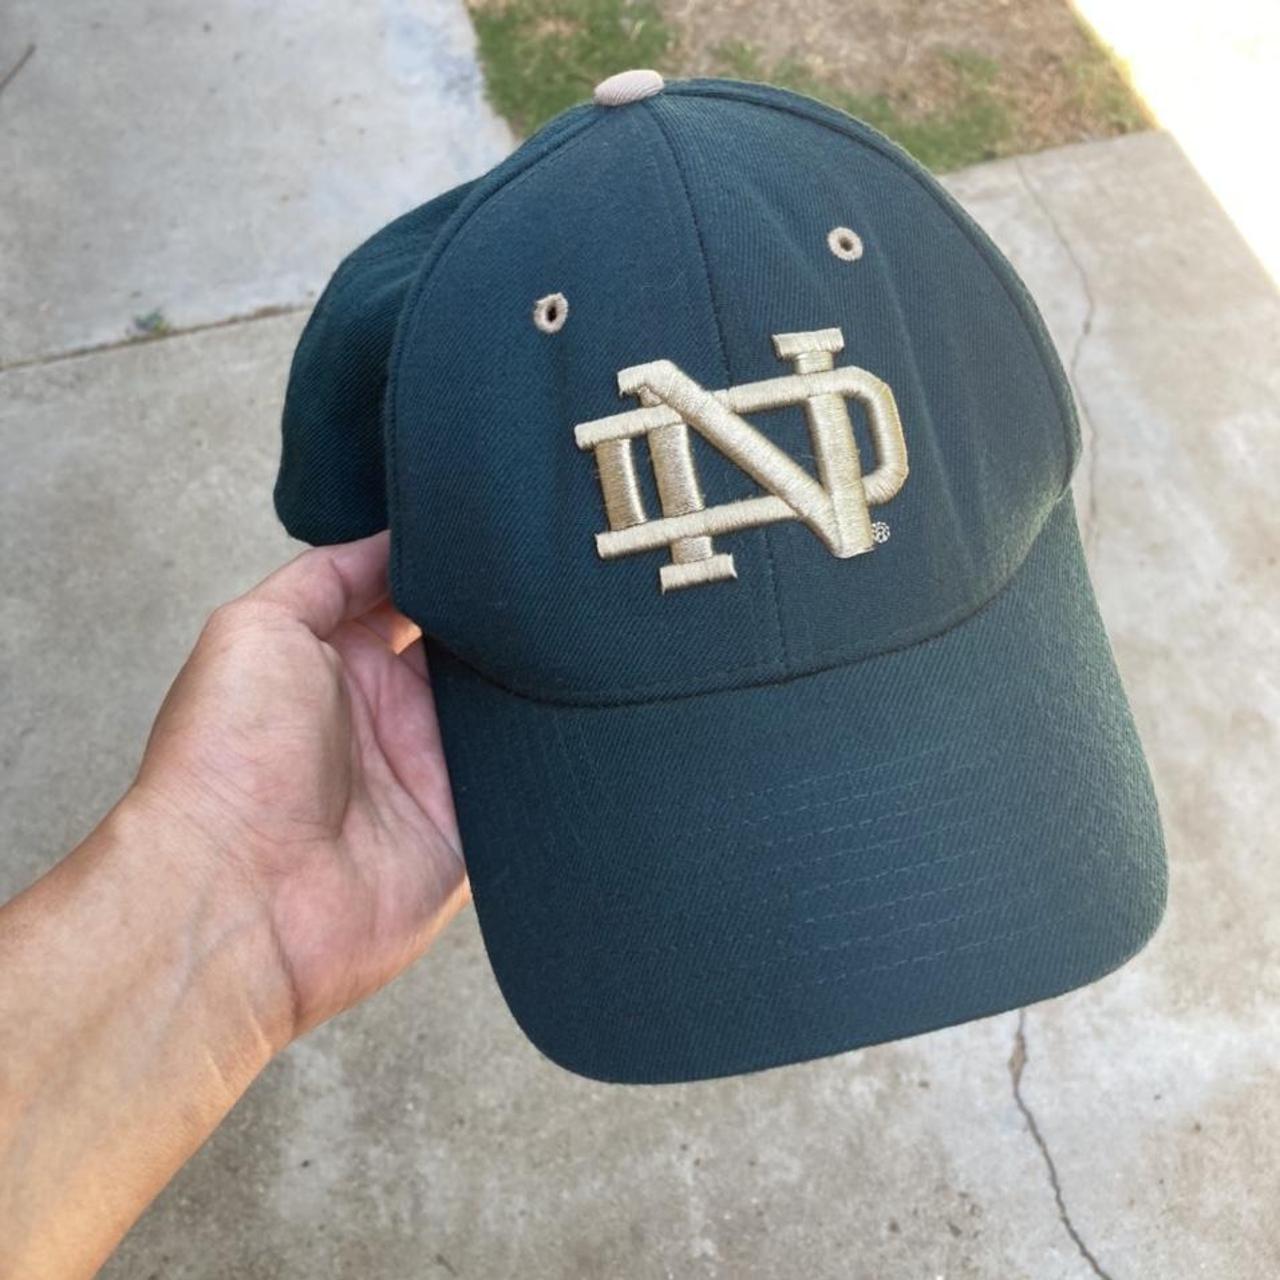 Notre Dame Fighting Irish baseball - Depop